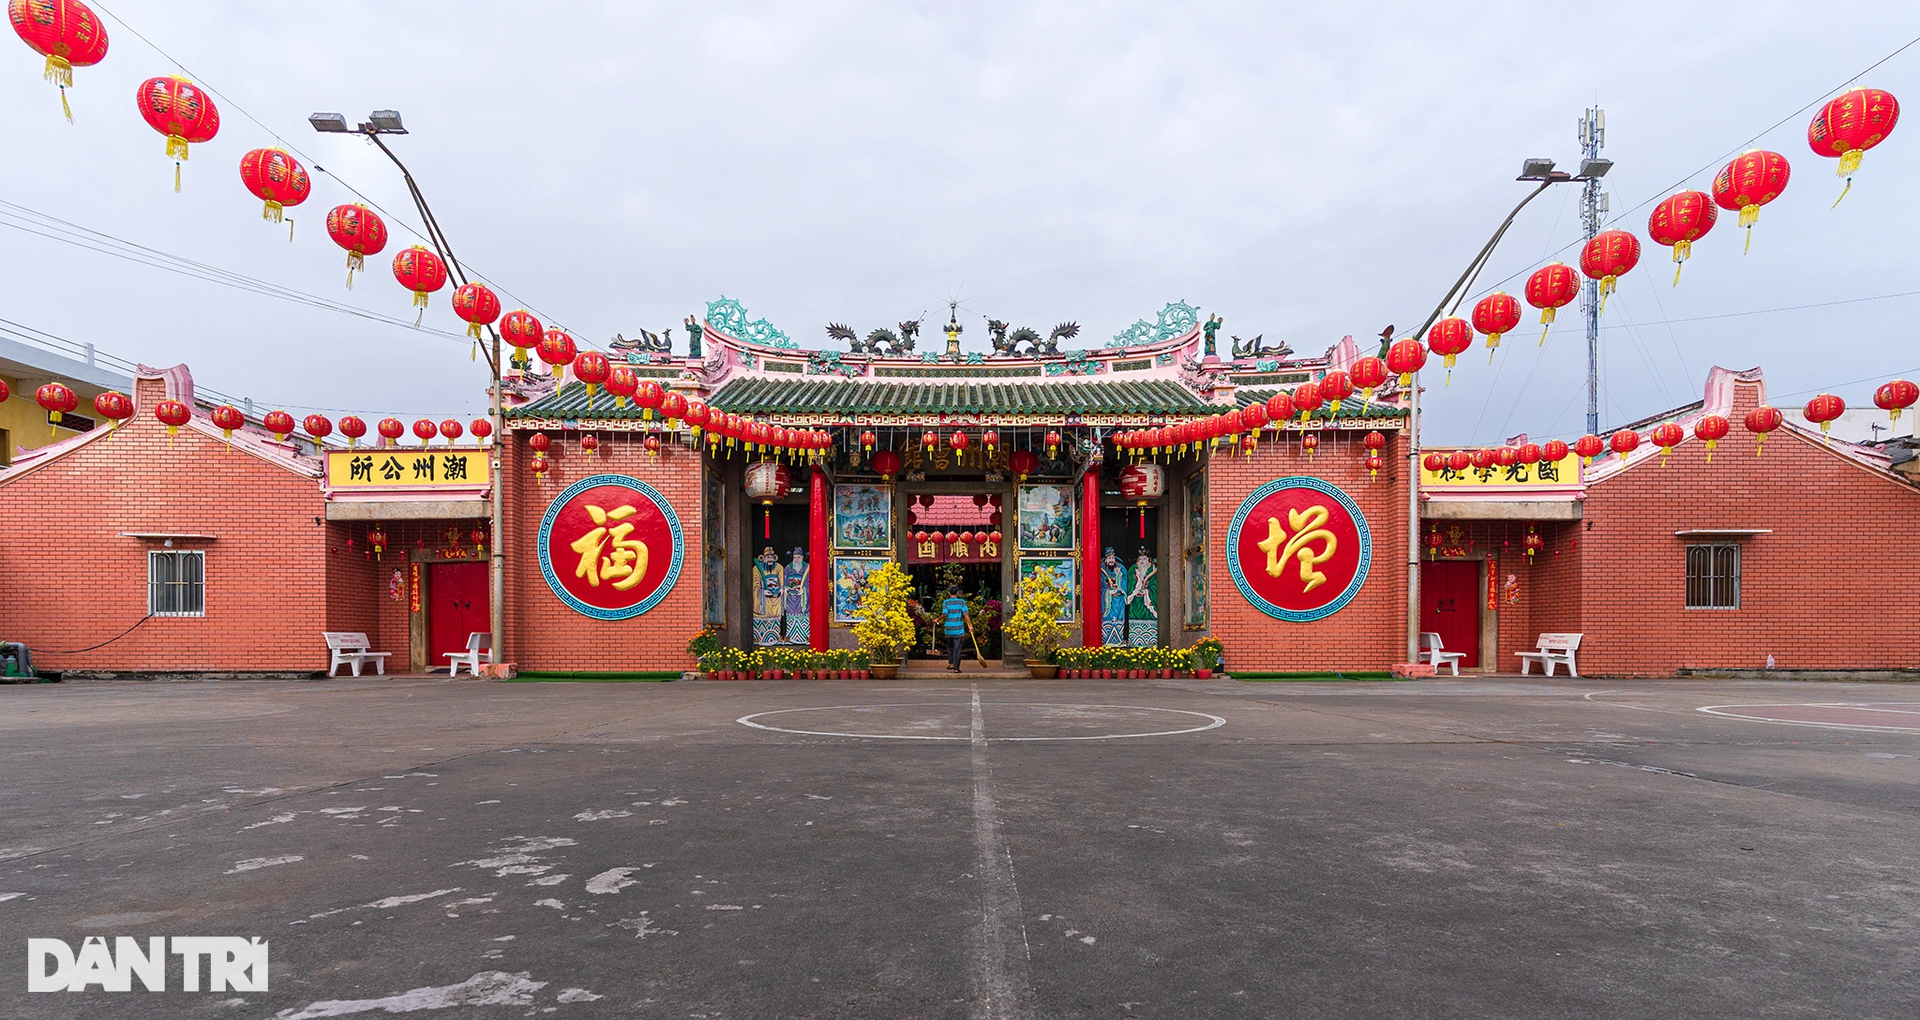 Hundreds of colorful lanterns inside the famous Soc Trang pagoda - 1